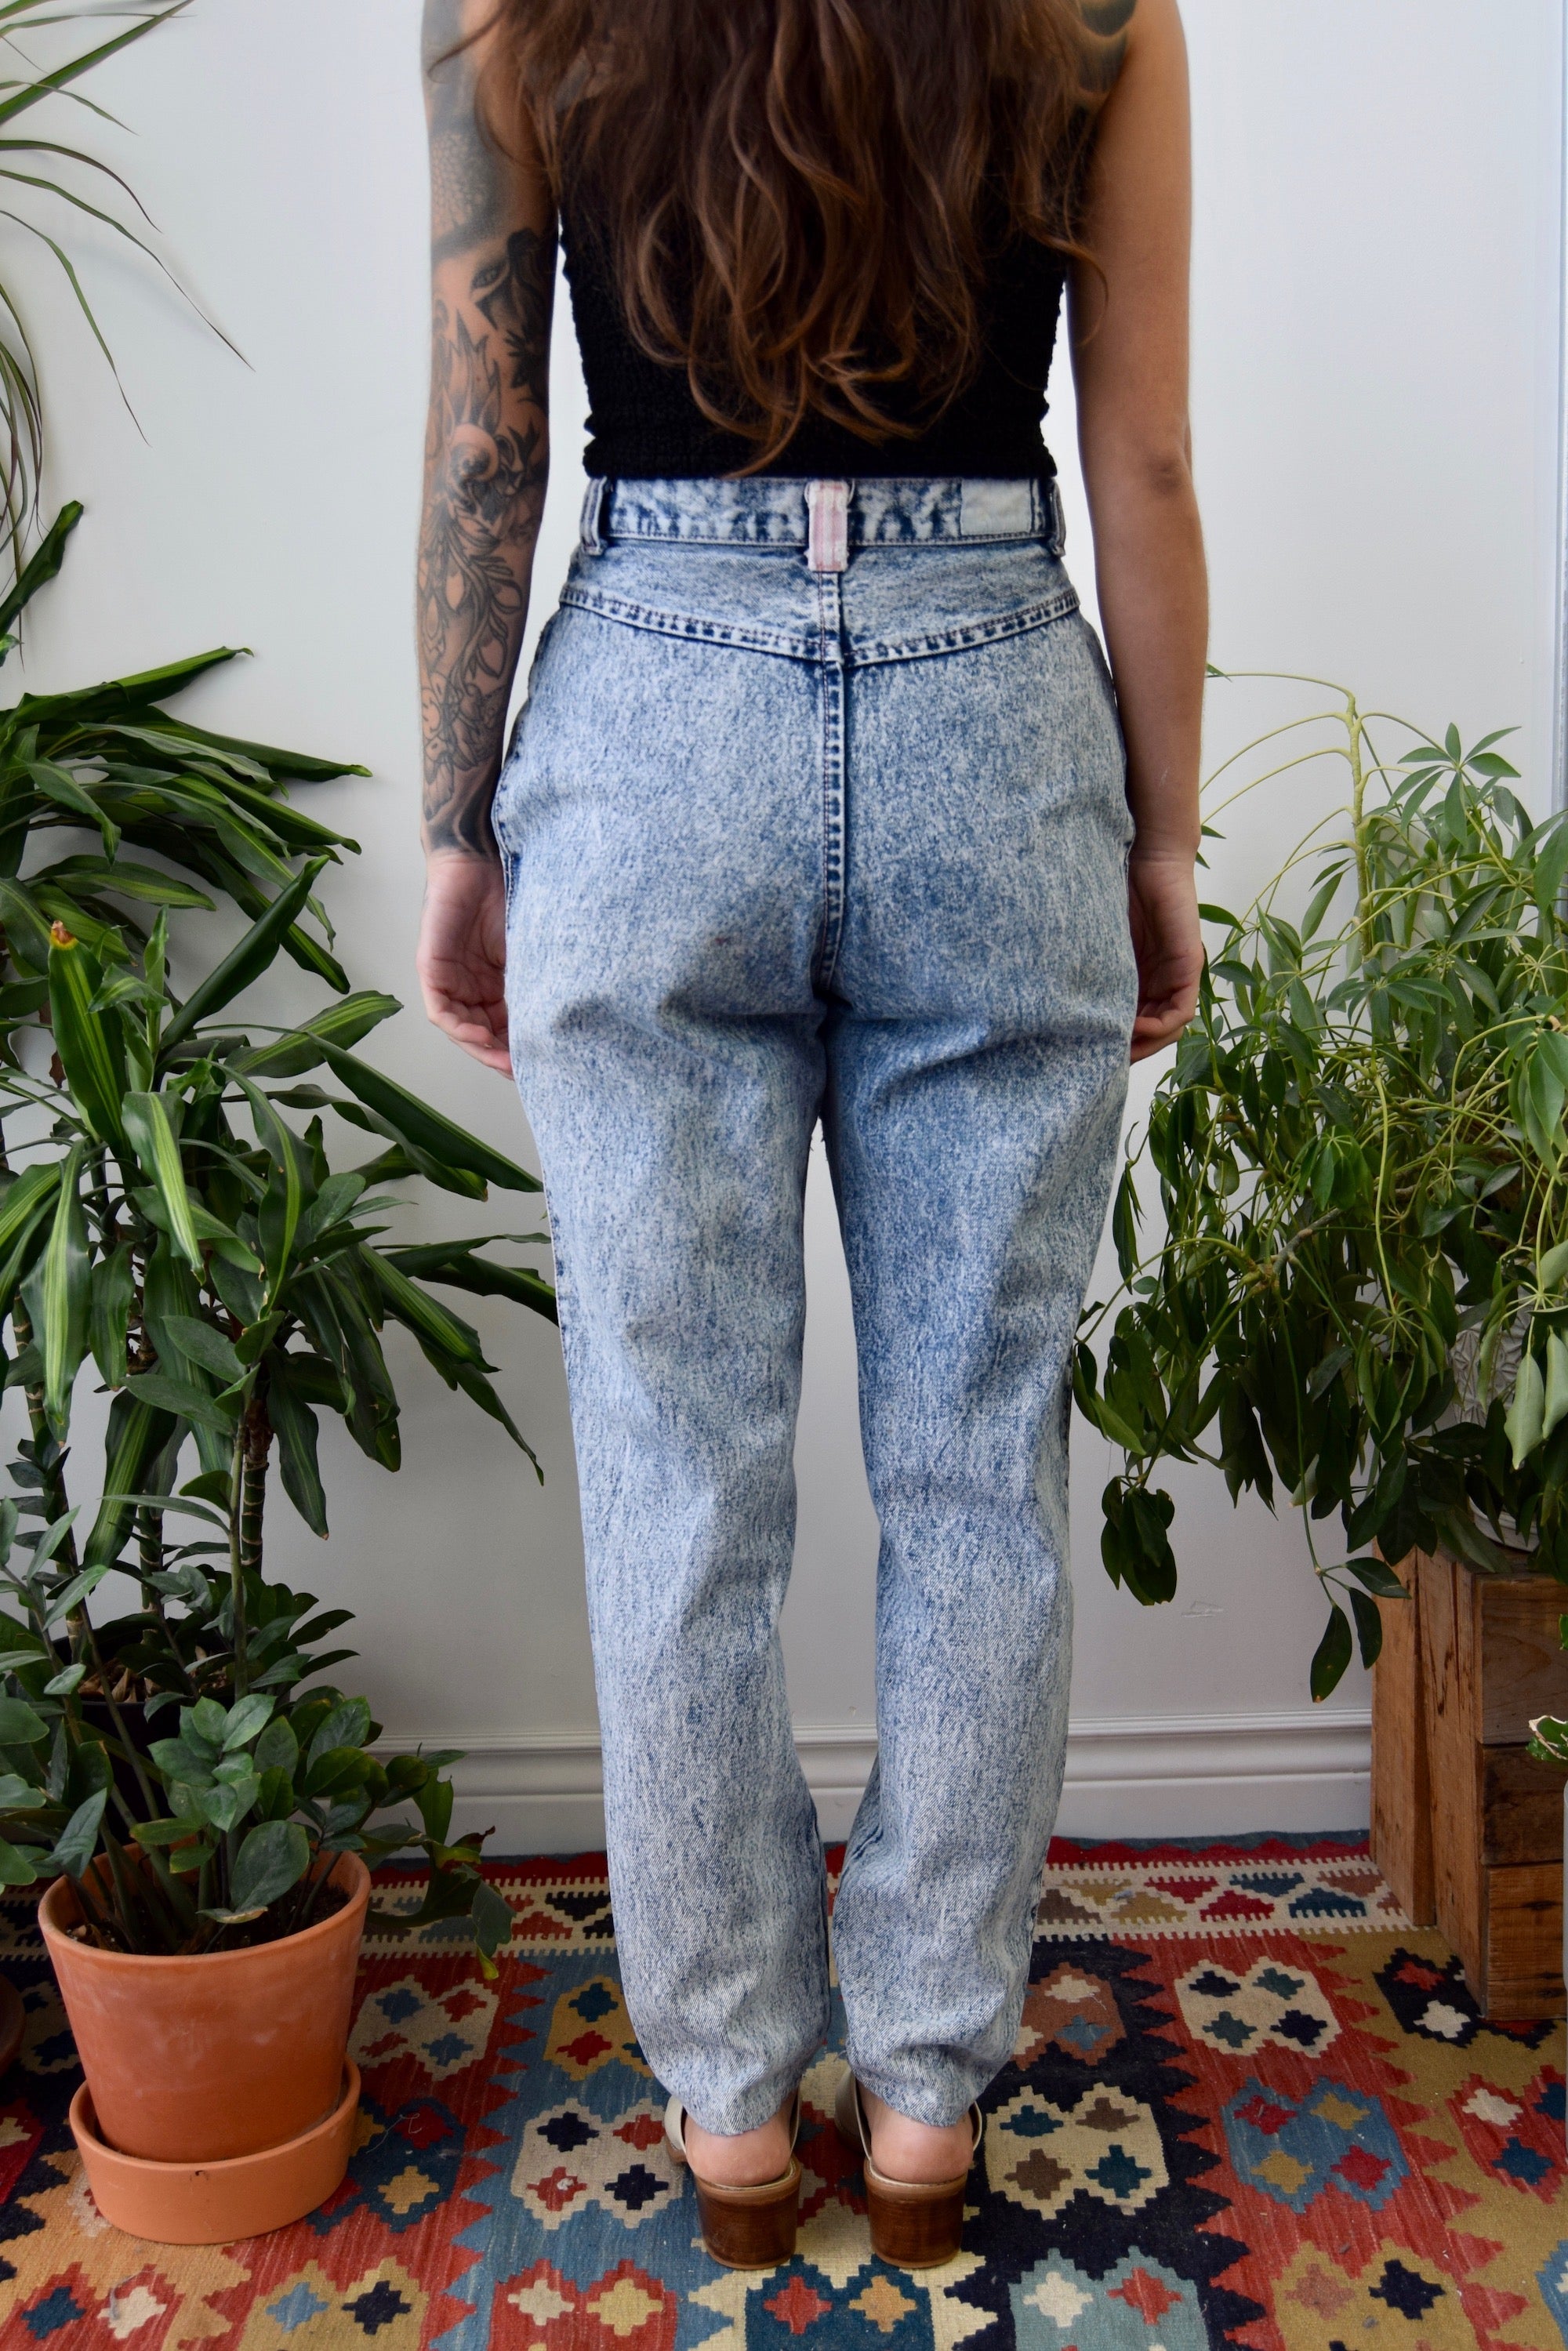 Eighties "Taboo" Jeans